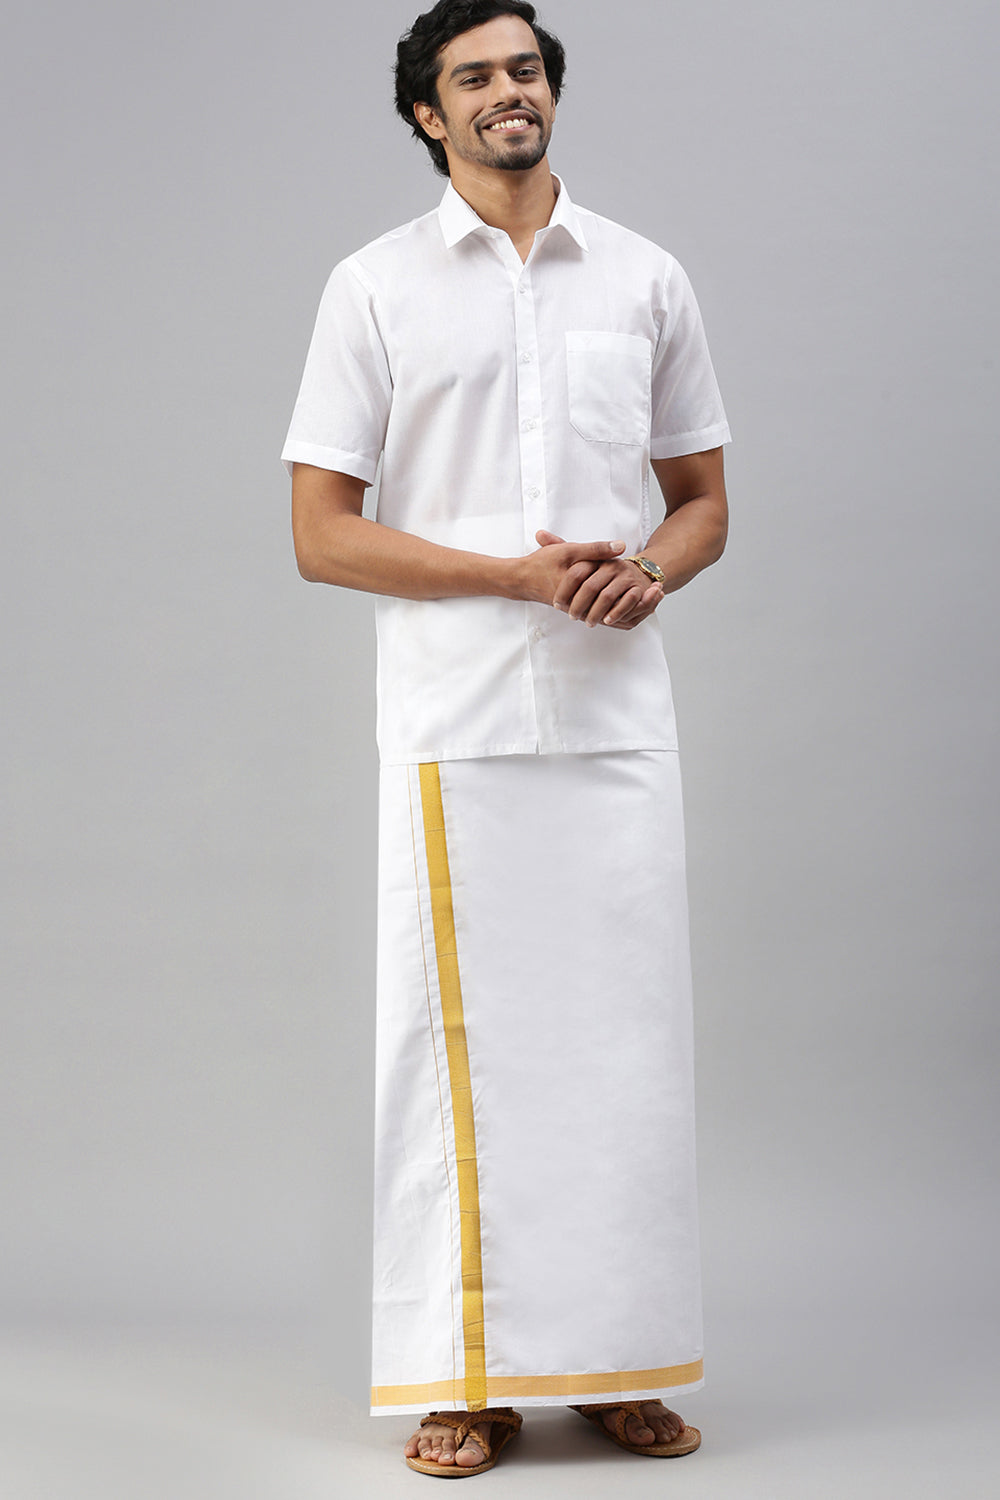 Mens Spill Resistant Guard 100% Cotton White Shirt Half Sleeves Elite Cotton -Full view